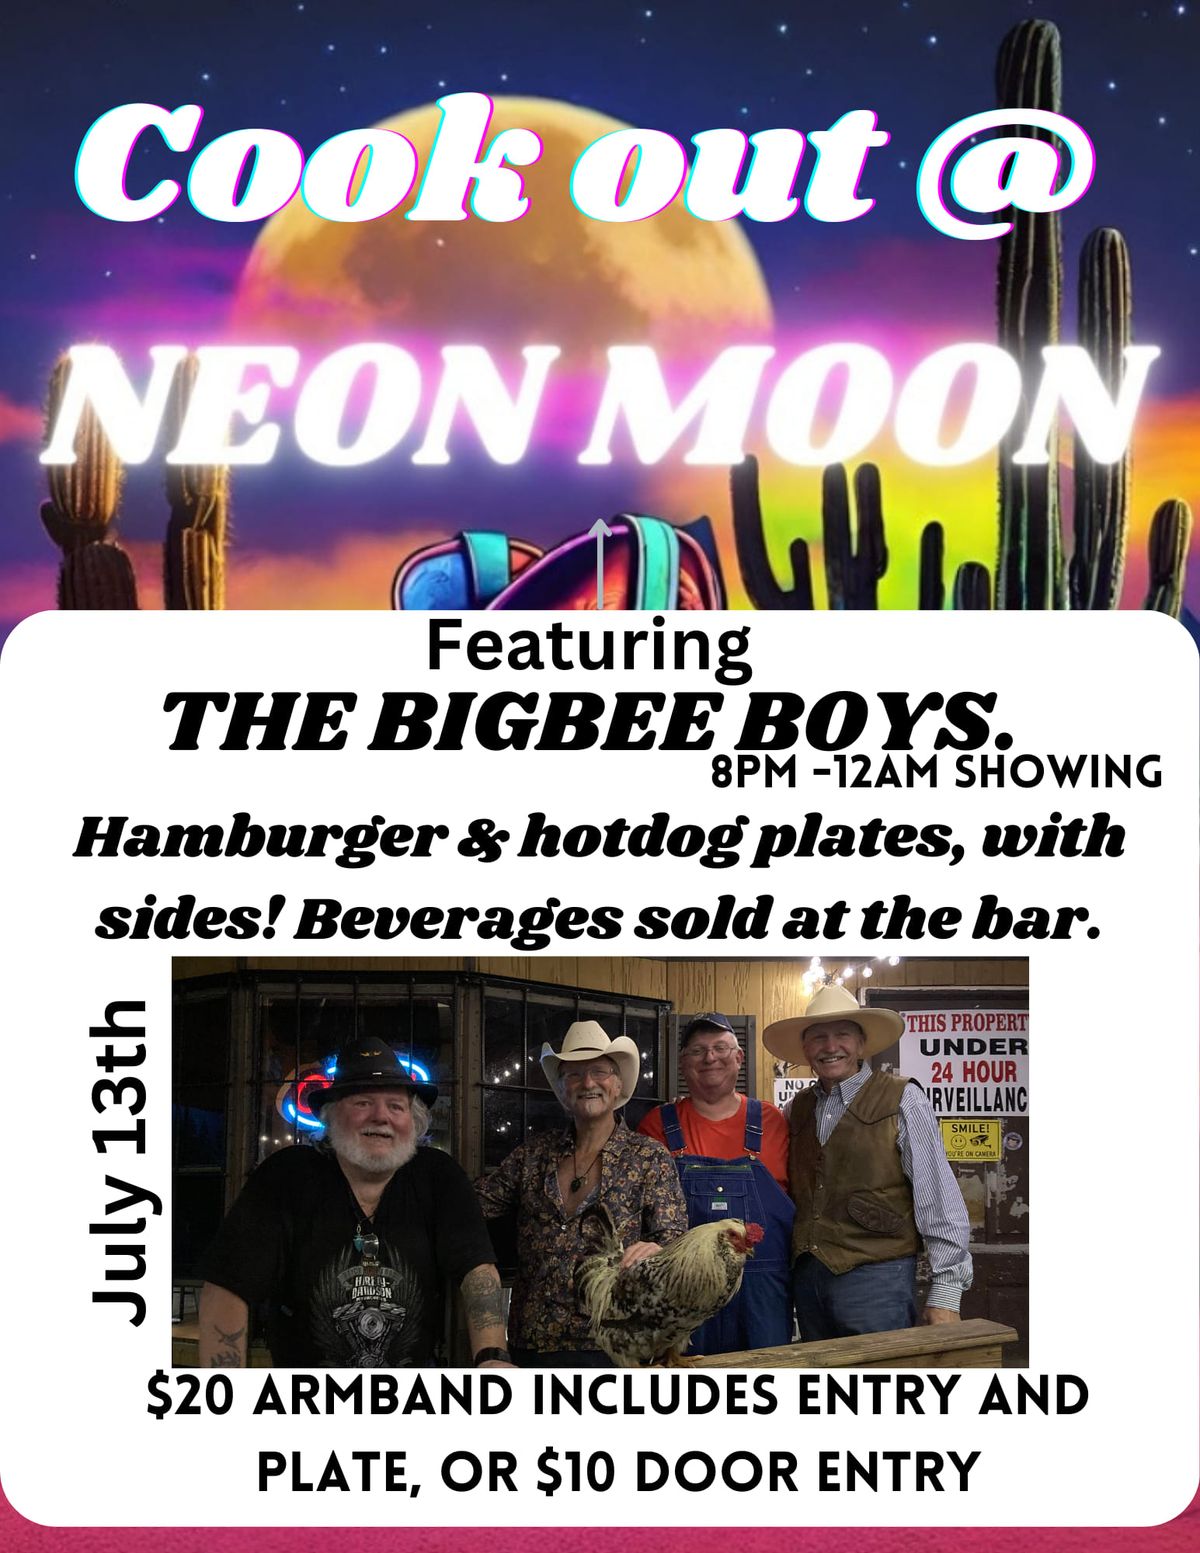 The Bigbee Boys @ Neon Moon